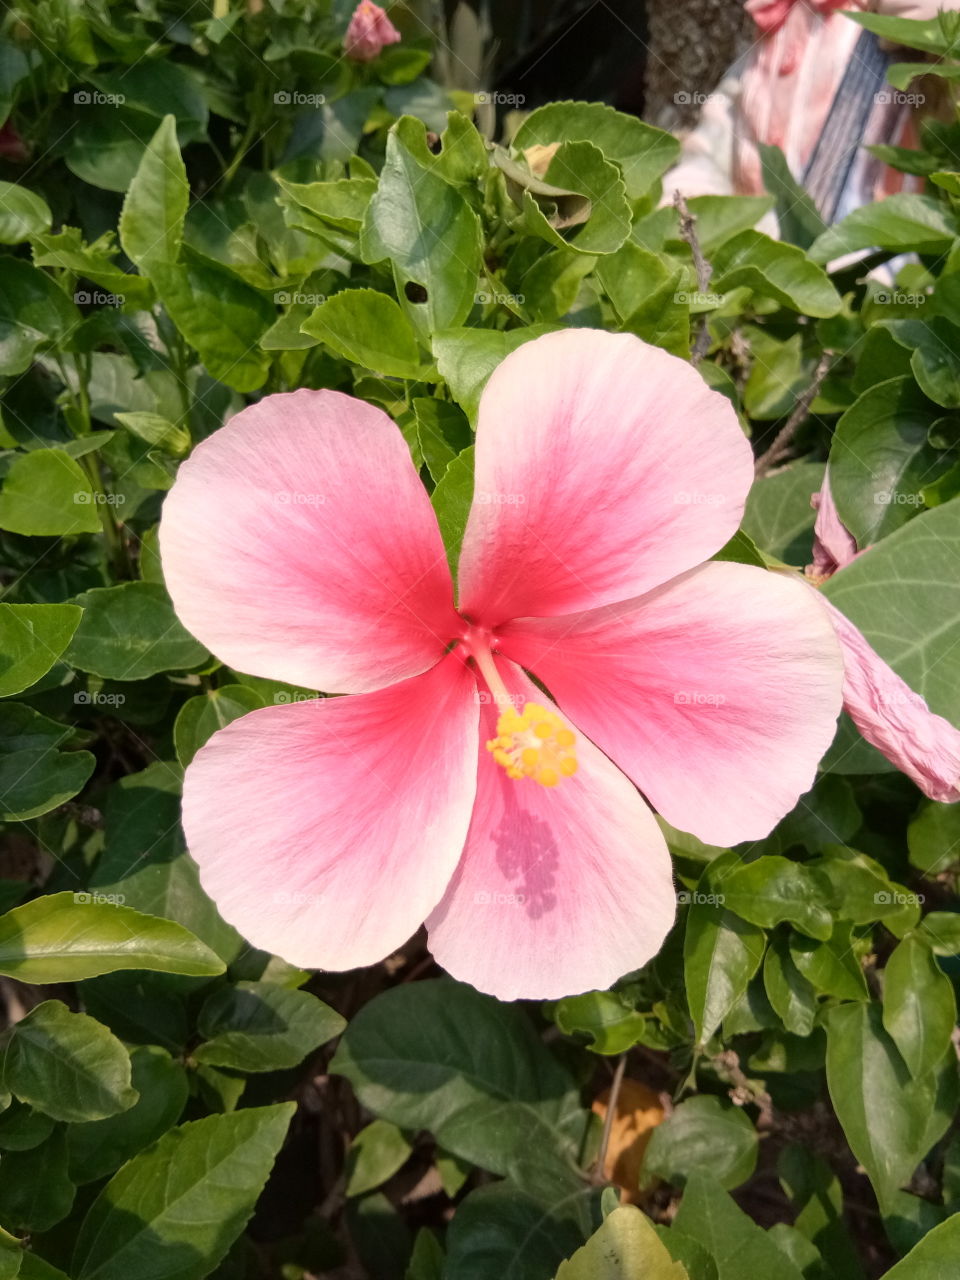 chaba
flower